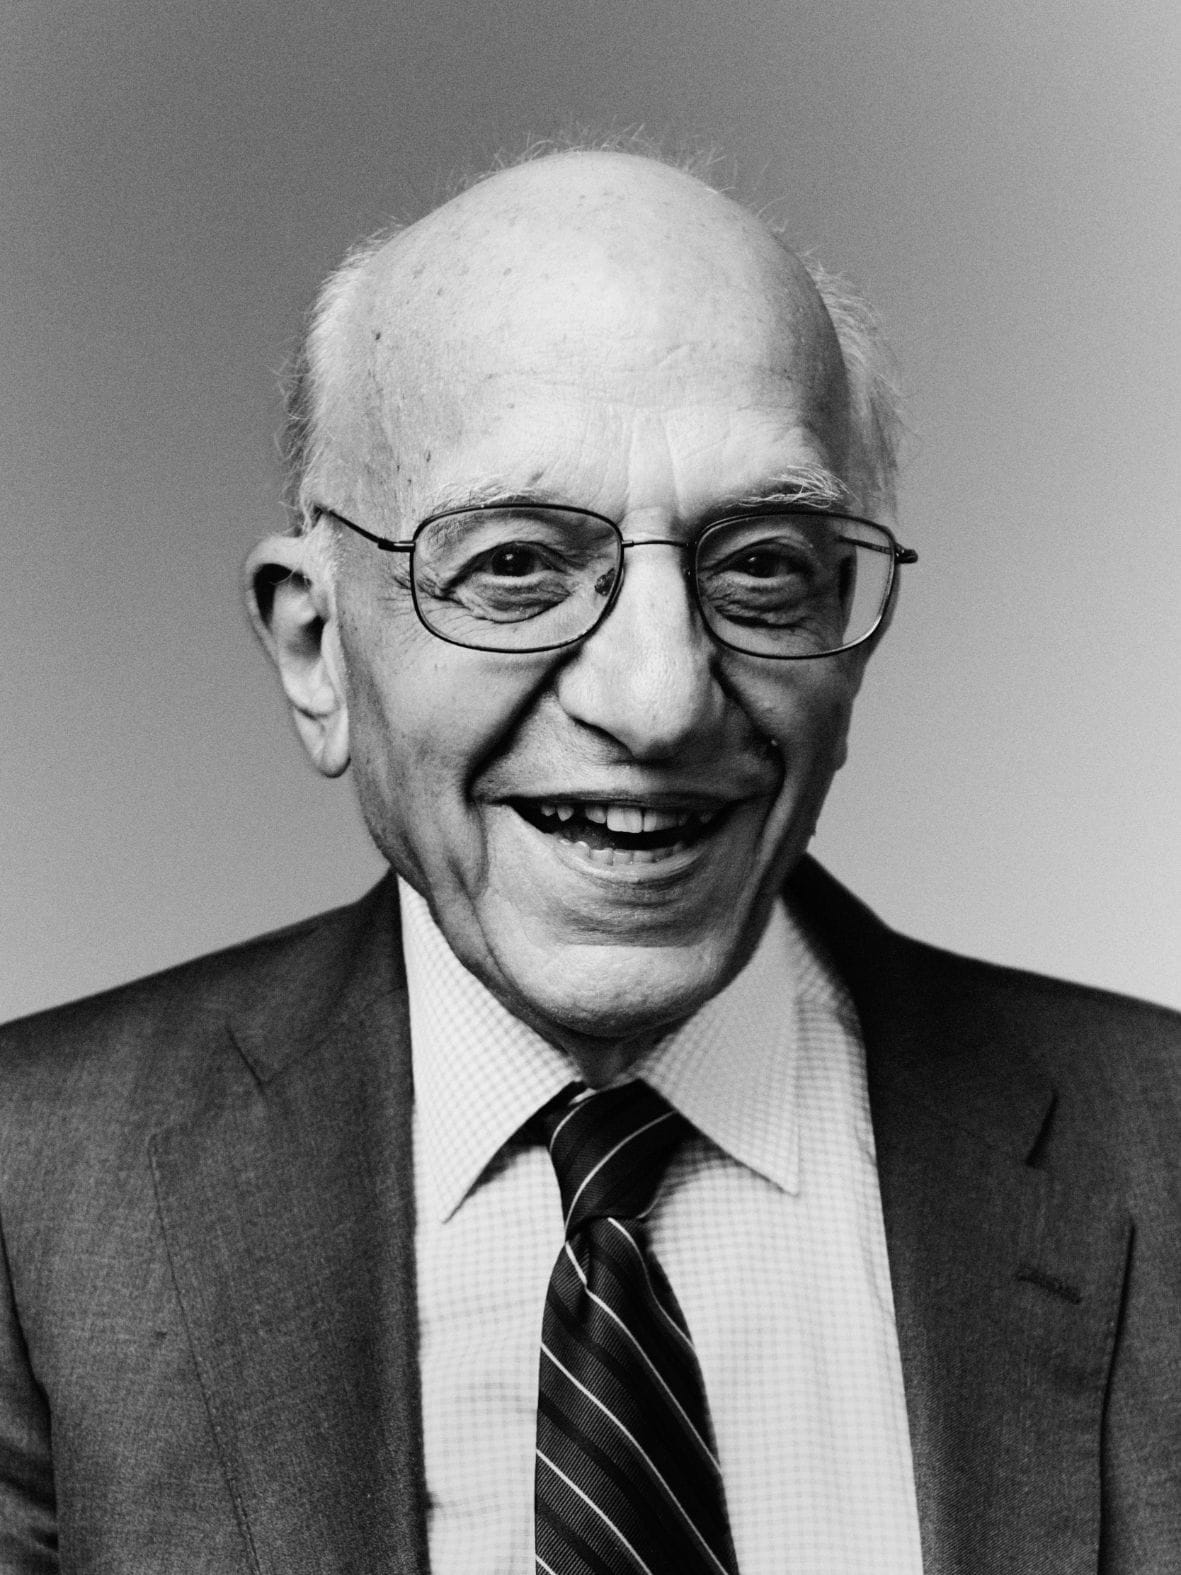 Close-up portrait of professor Jeremy Siegel smiling.